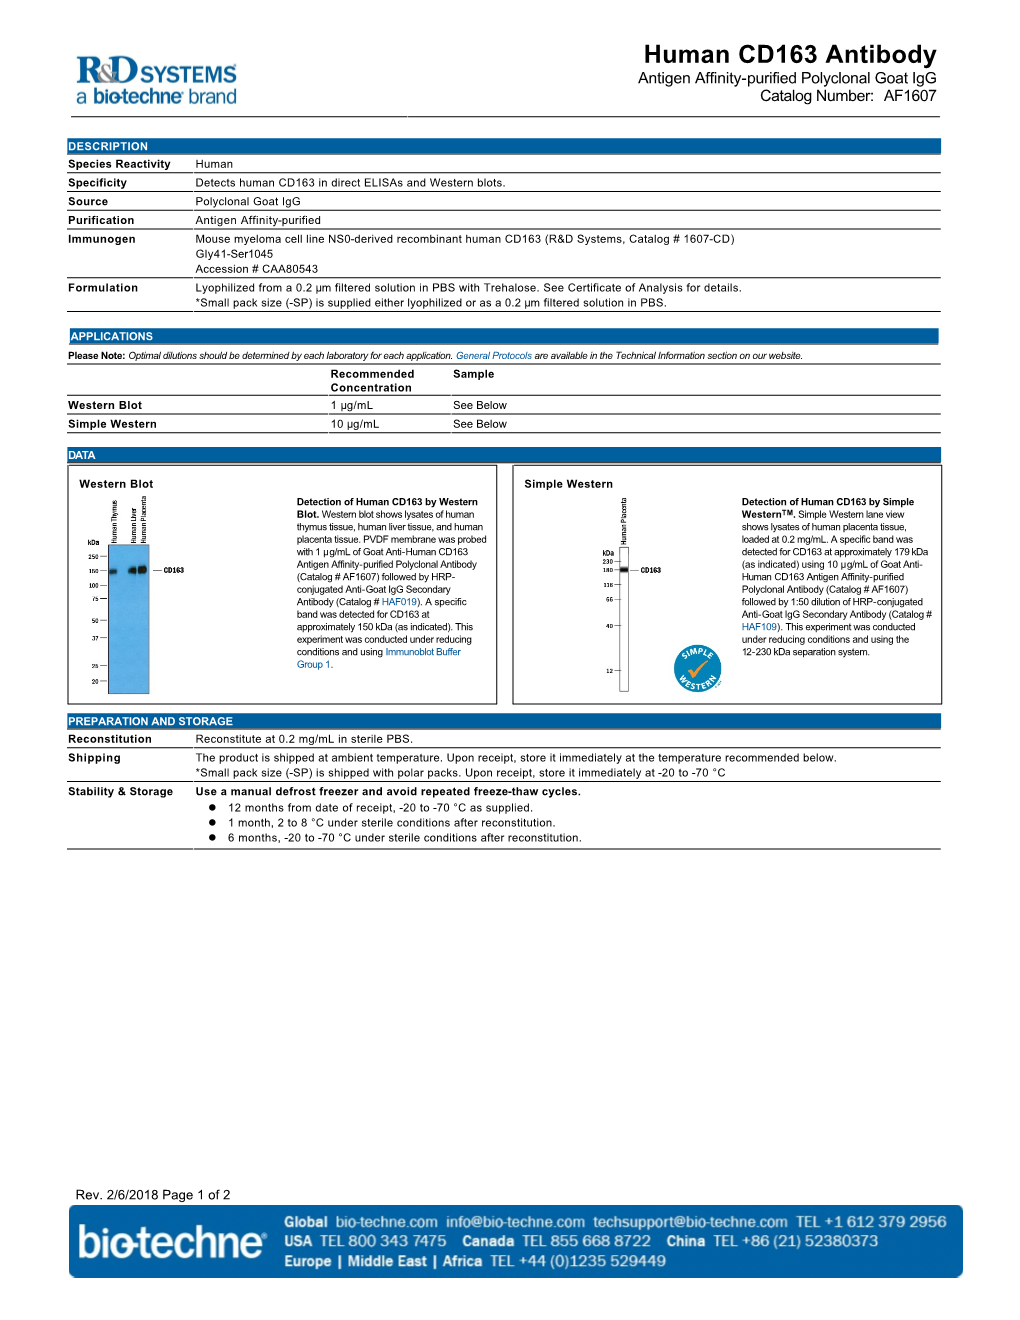 Human CD163 Antibody Antigen Affinity-Purified Polyclonal Goat Igg Catalog Number: AF1607